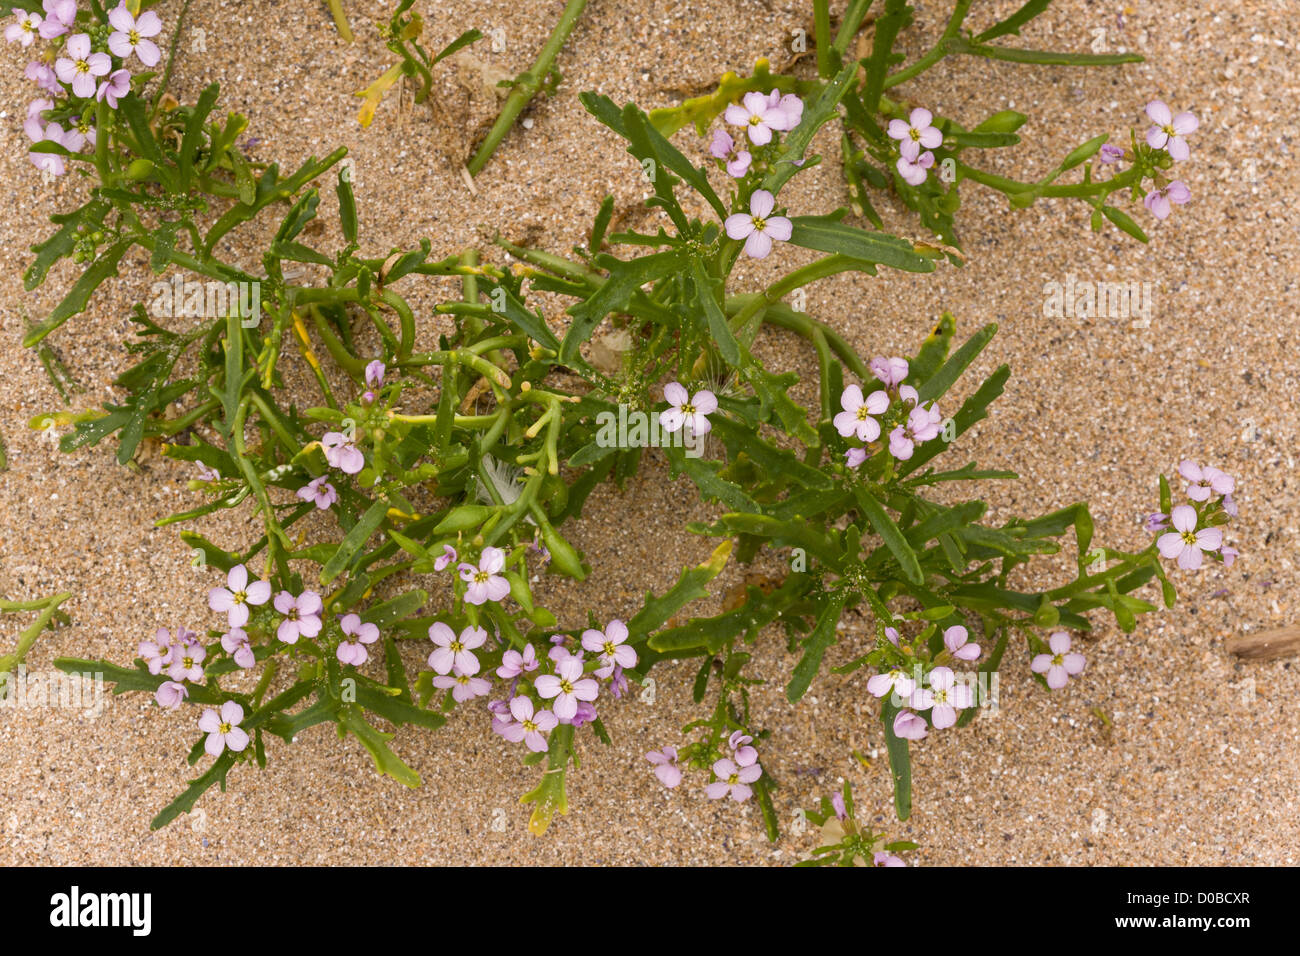 European Searocket (Cakile maritima ssp. integrifolia), in flower and fruit, on sand dunes. Stock Photo